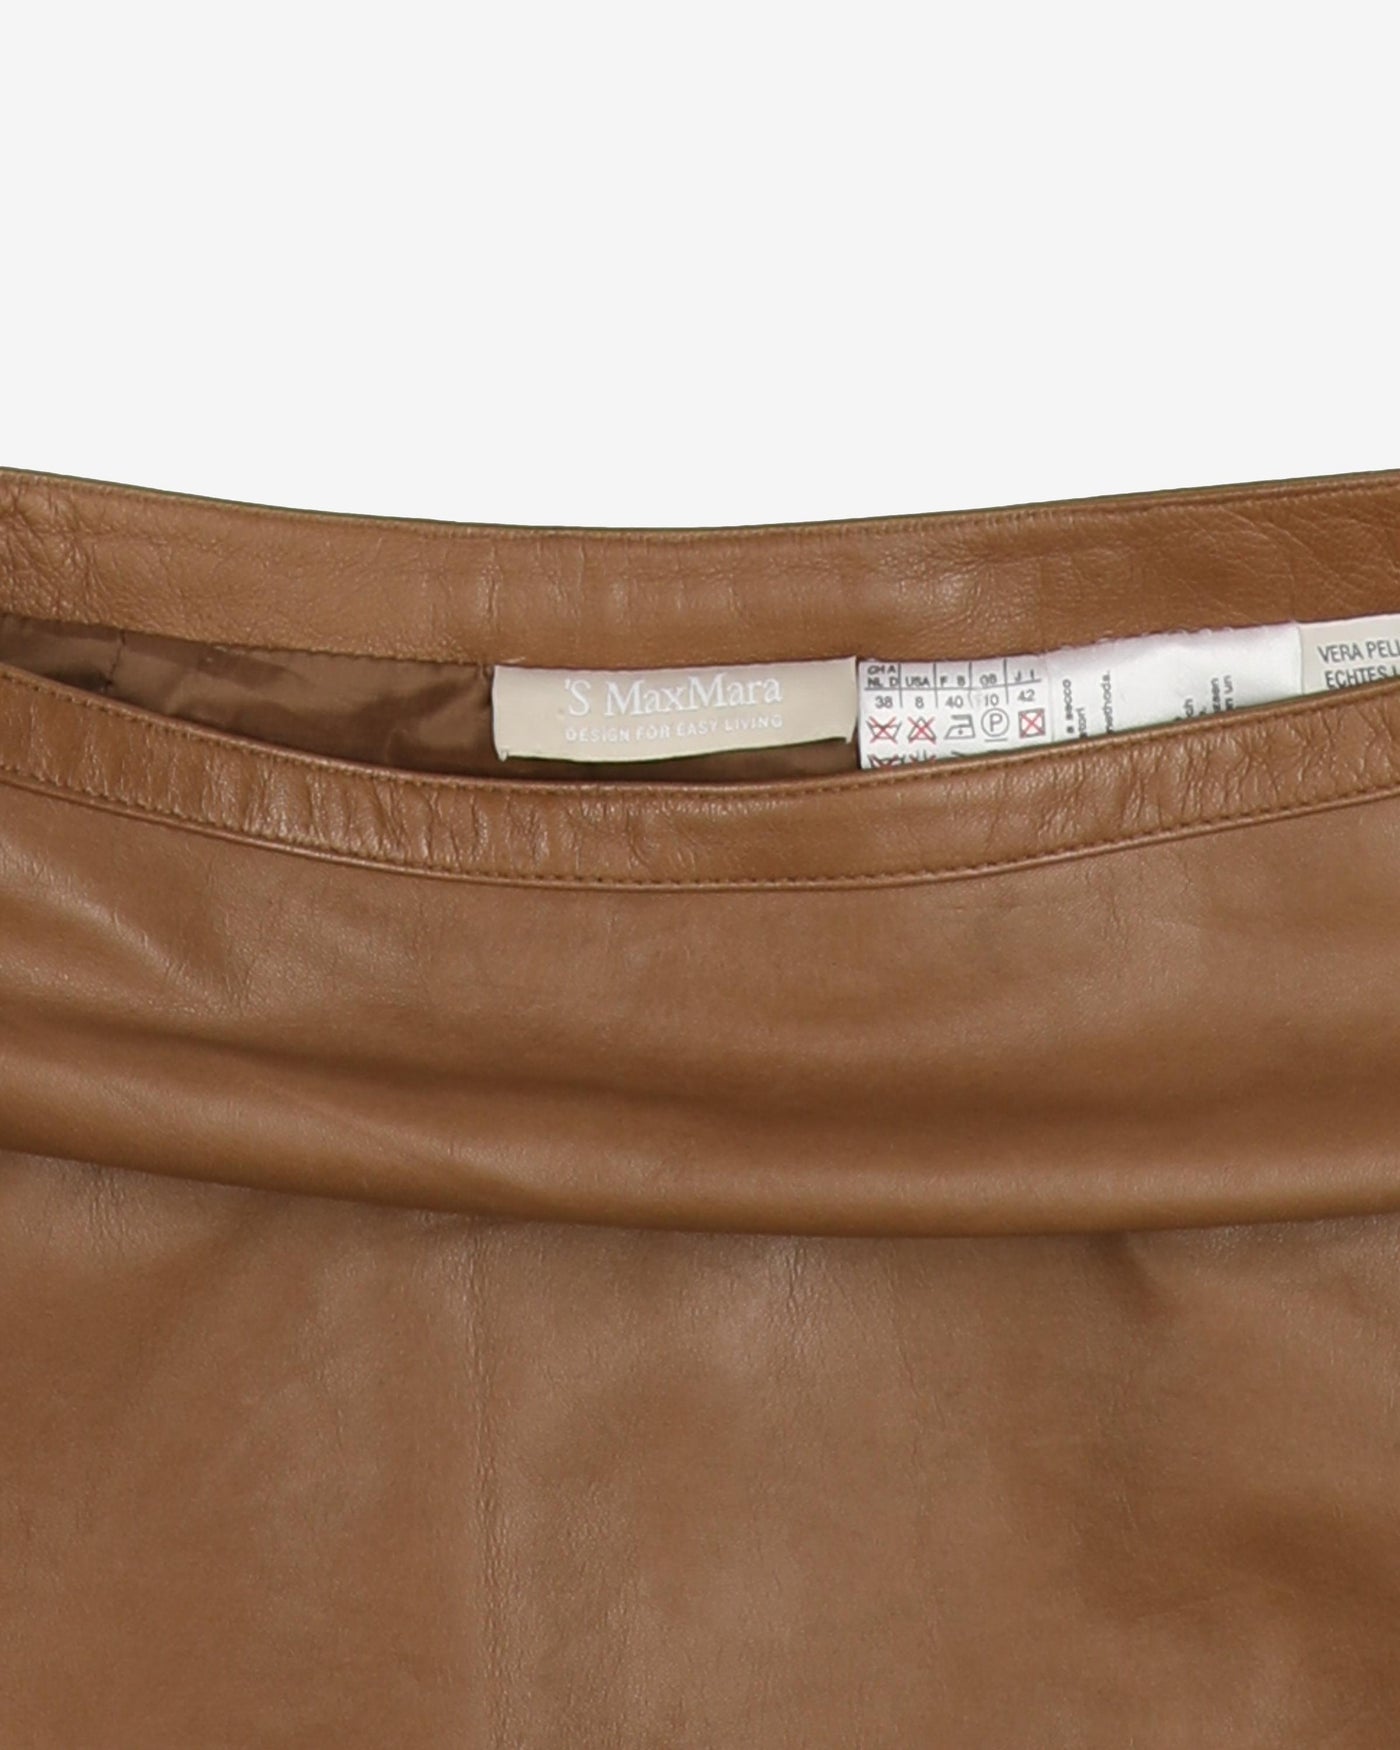 'S MaxMara Brown Leather Pencil Skirt - S